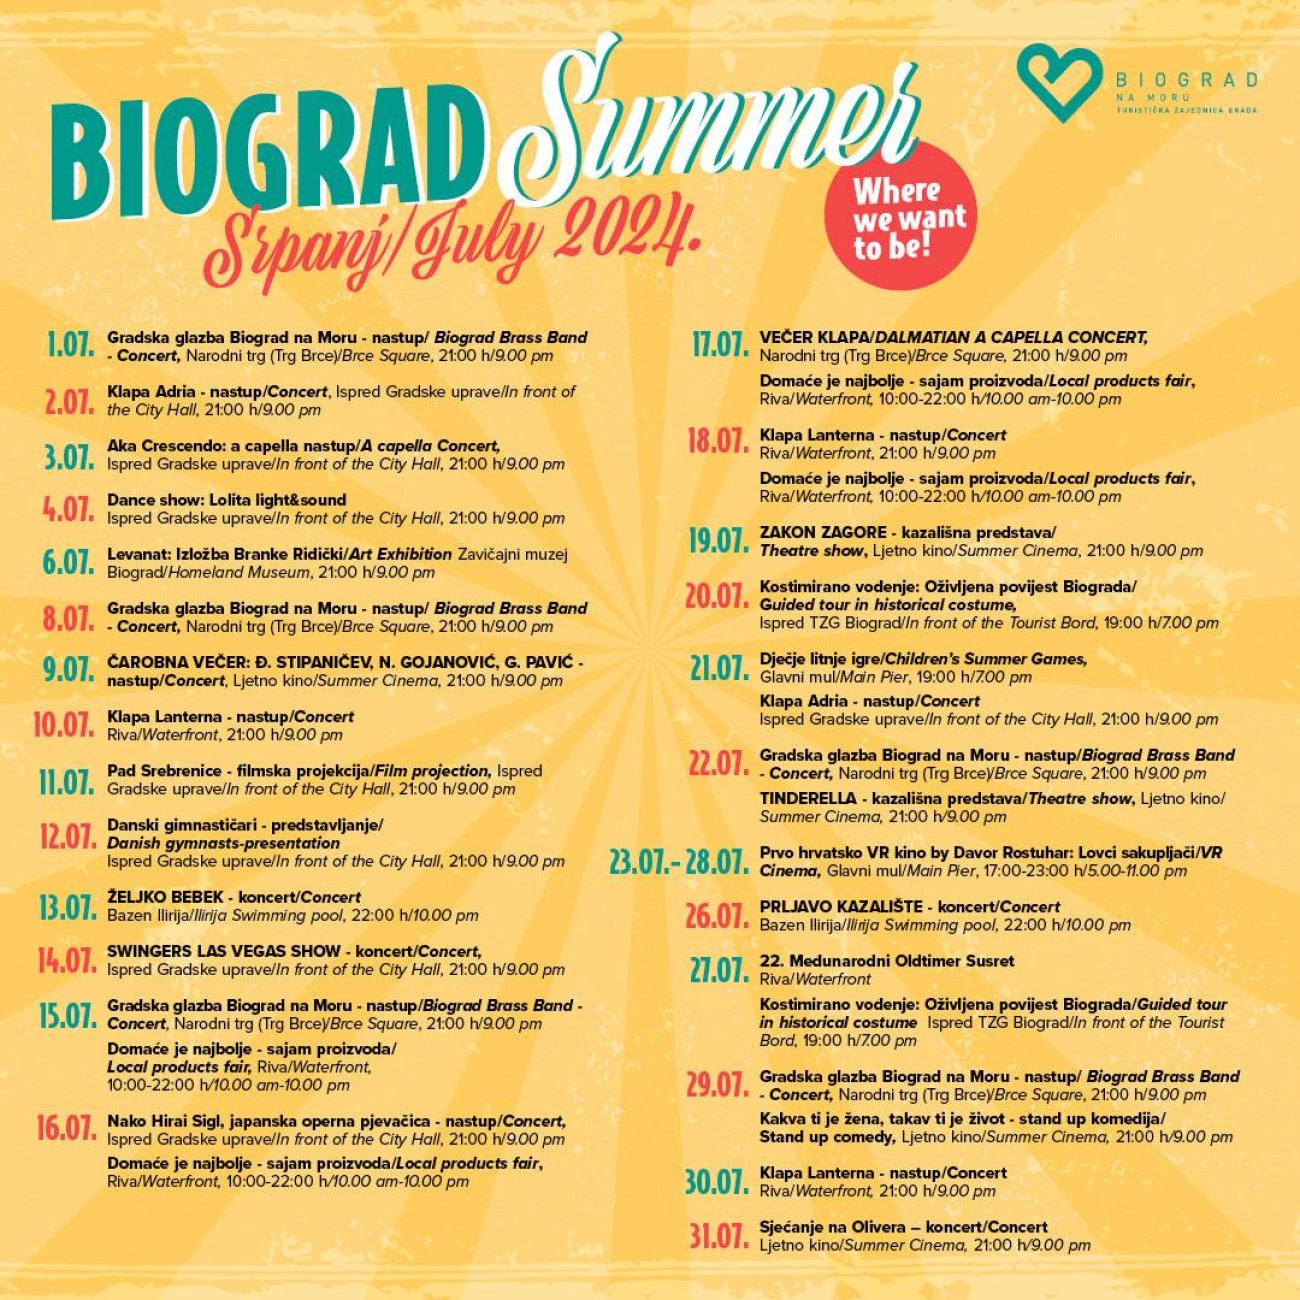 Biograd SUMMER - Srpanj/July 2024 (Where we want to be!)